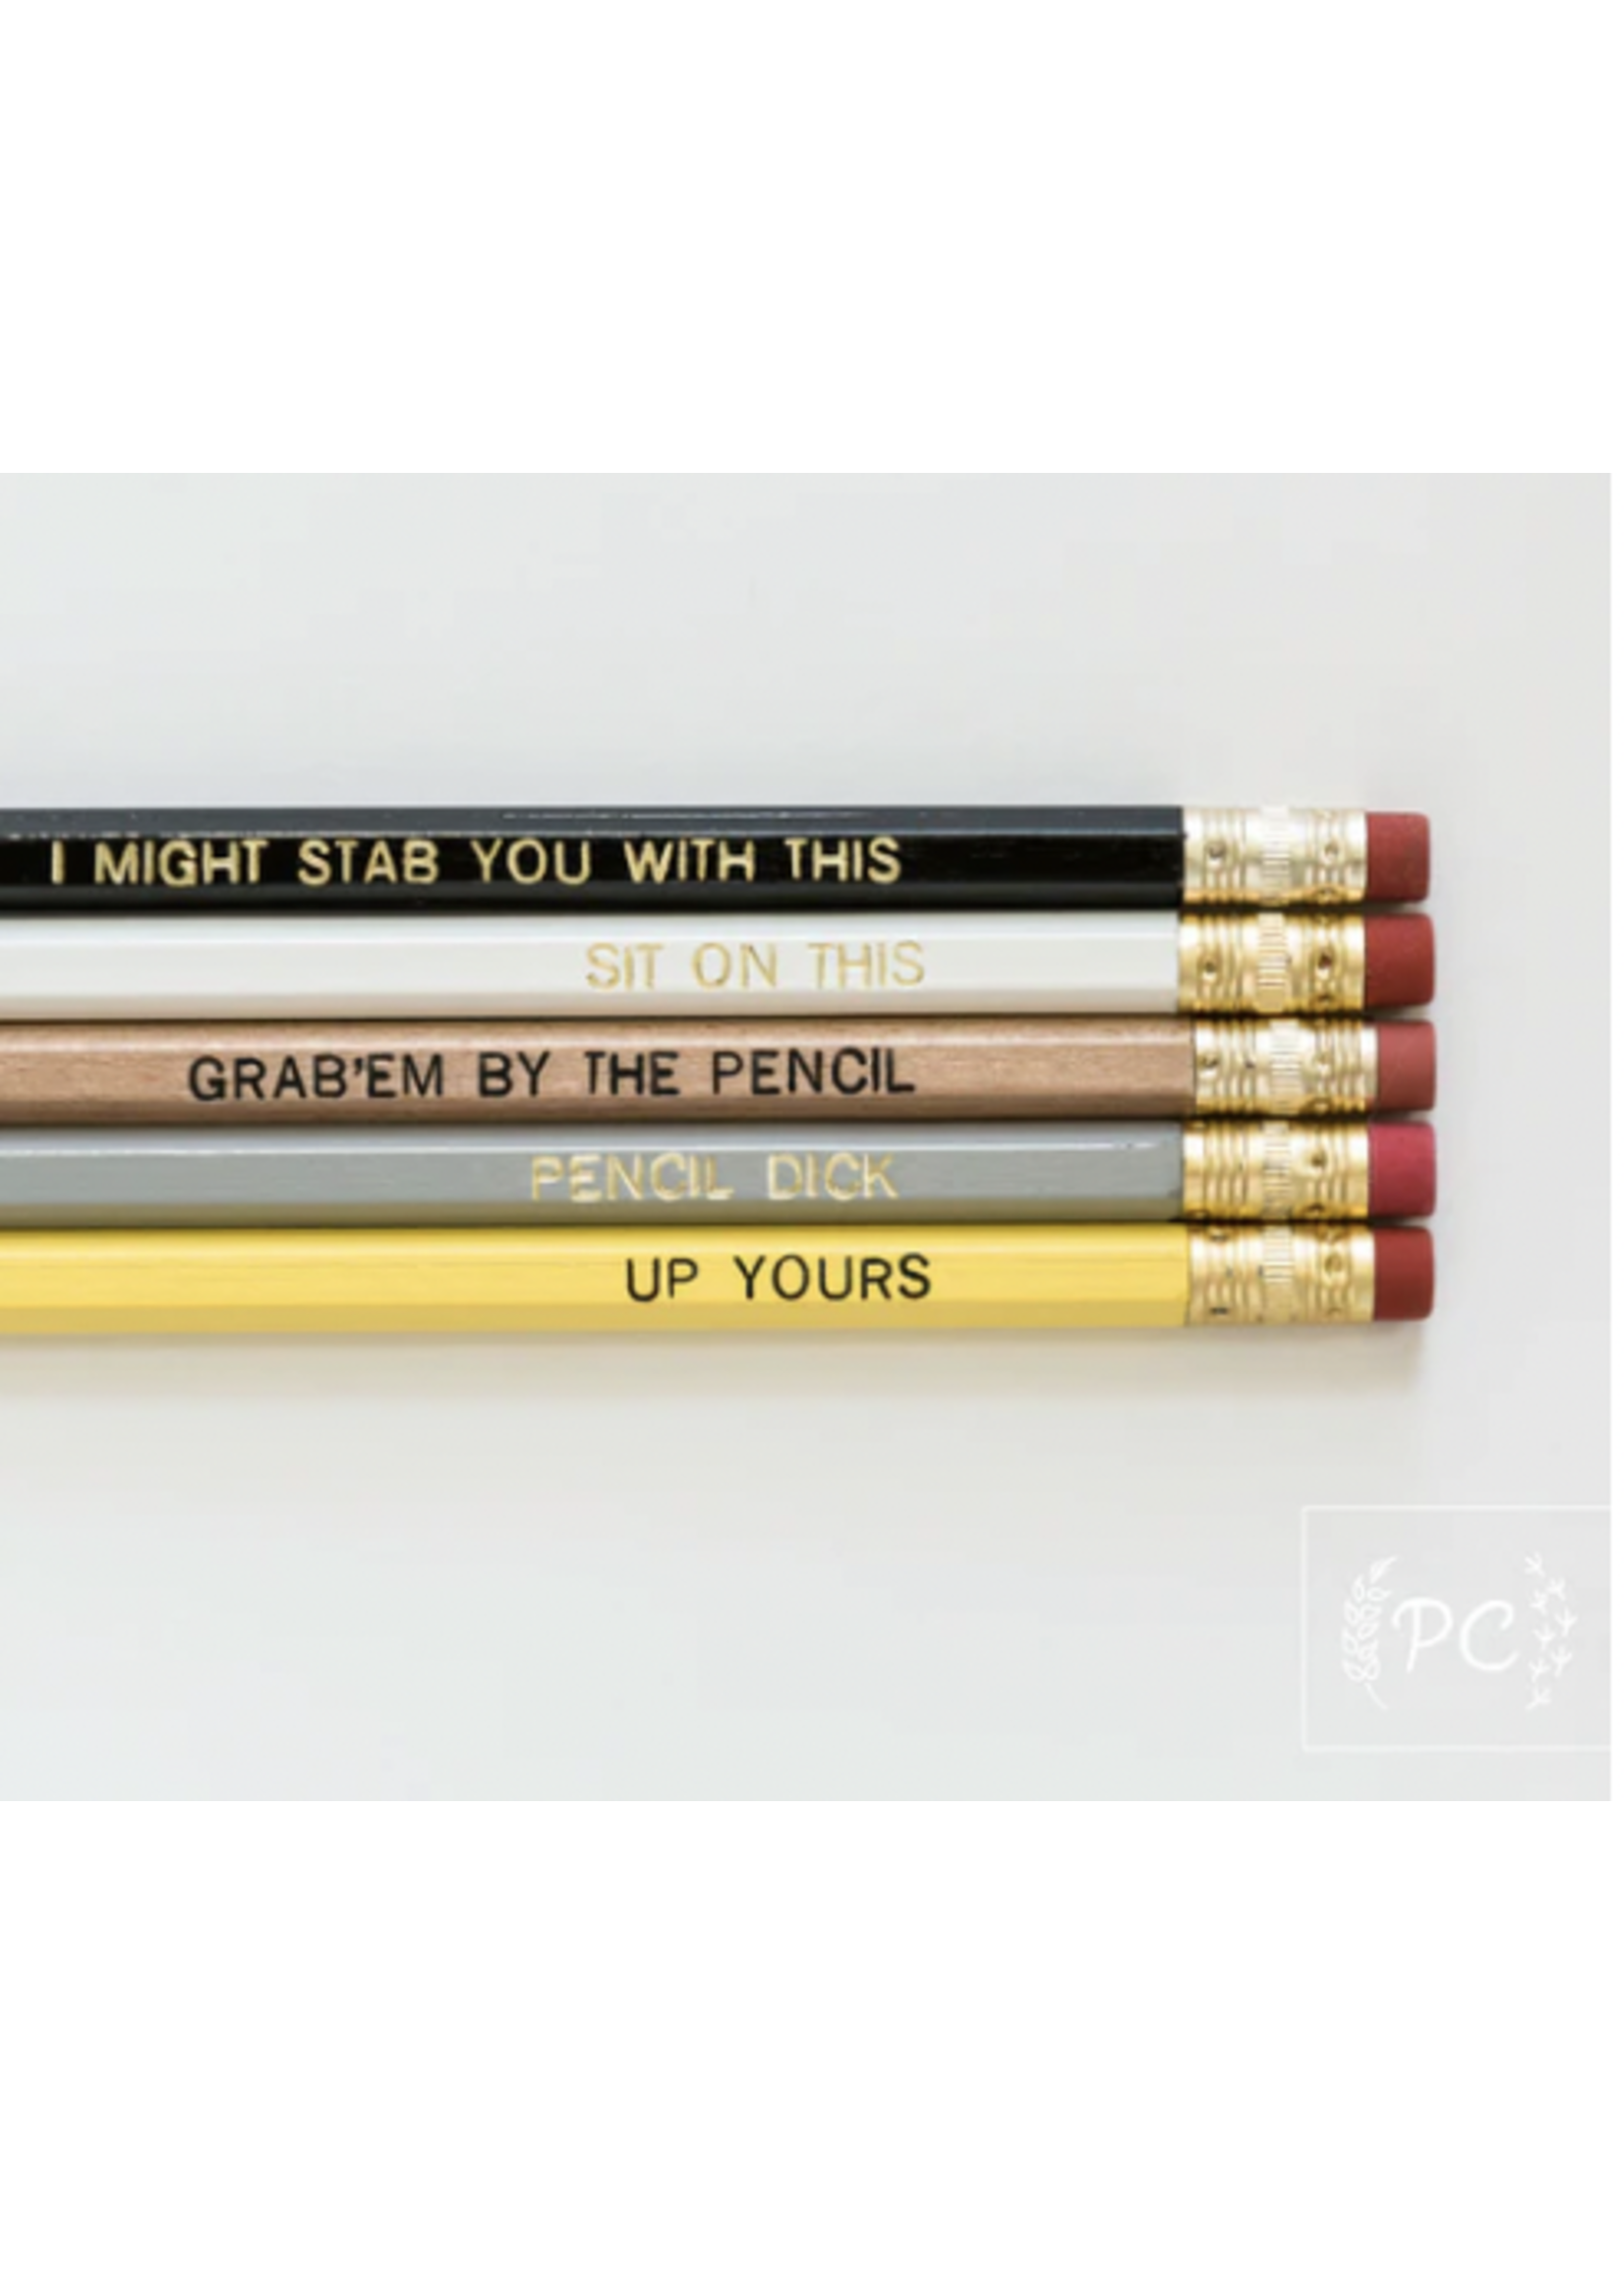 Prairie Chick Prints Pencil Set - Pencil Love 2 - Grab'em By The Pencil